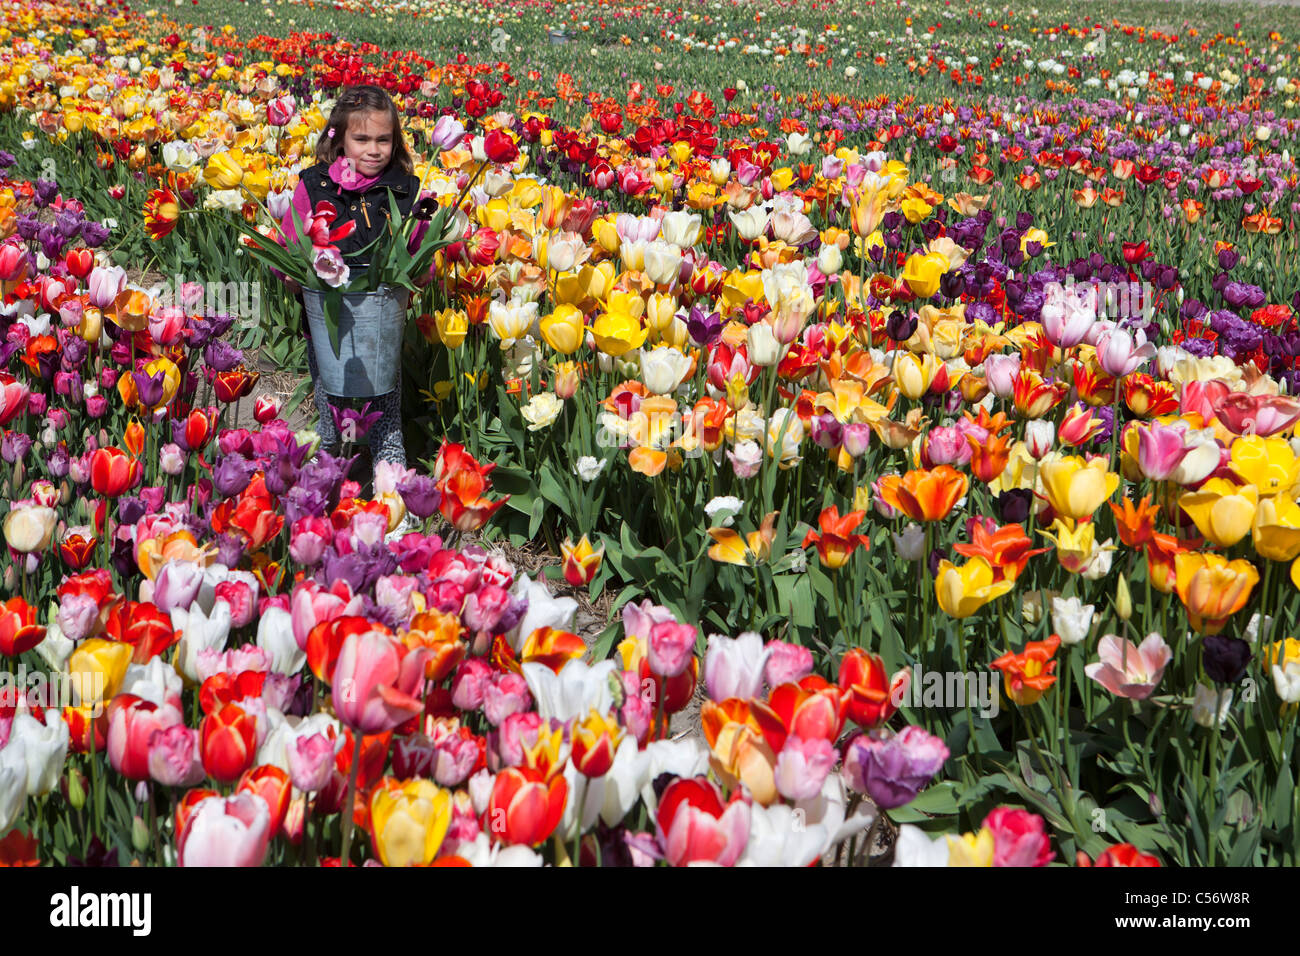 The Netherlands, Julianadorp, Tulip field. Girl picking flowers. Stock Photo